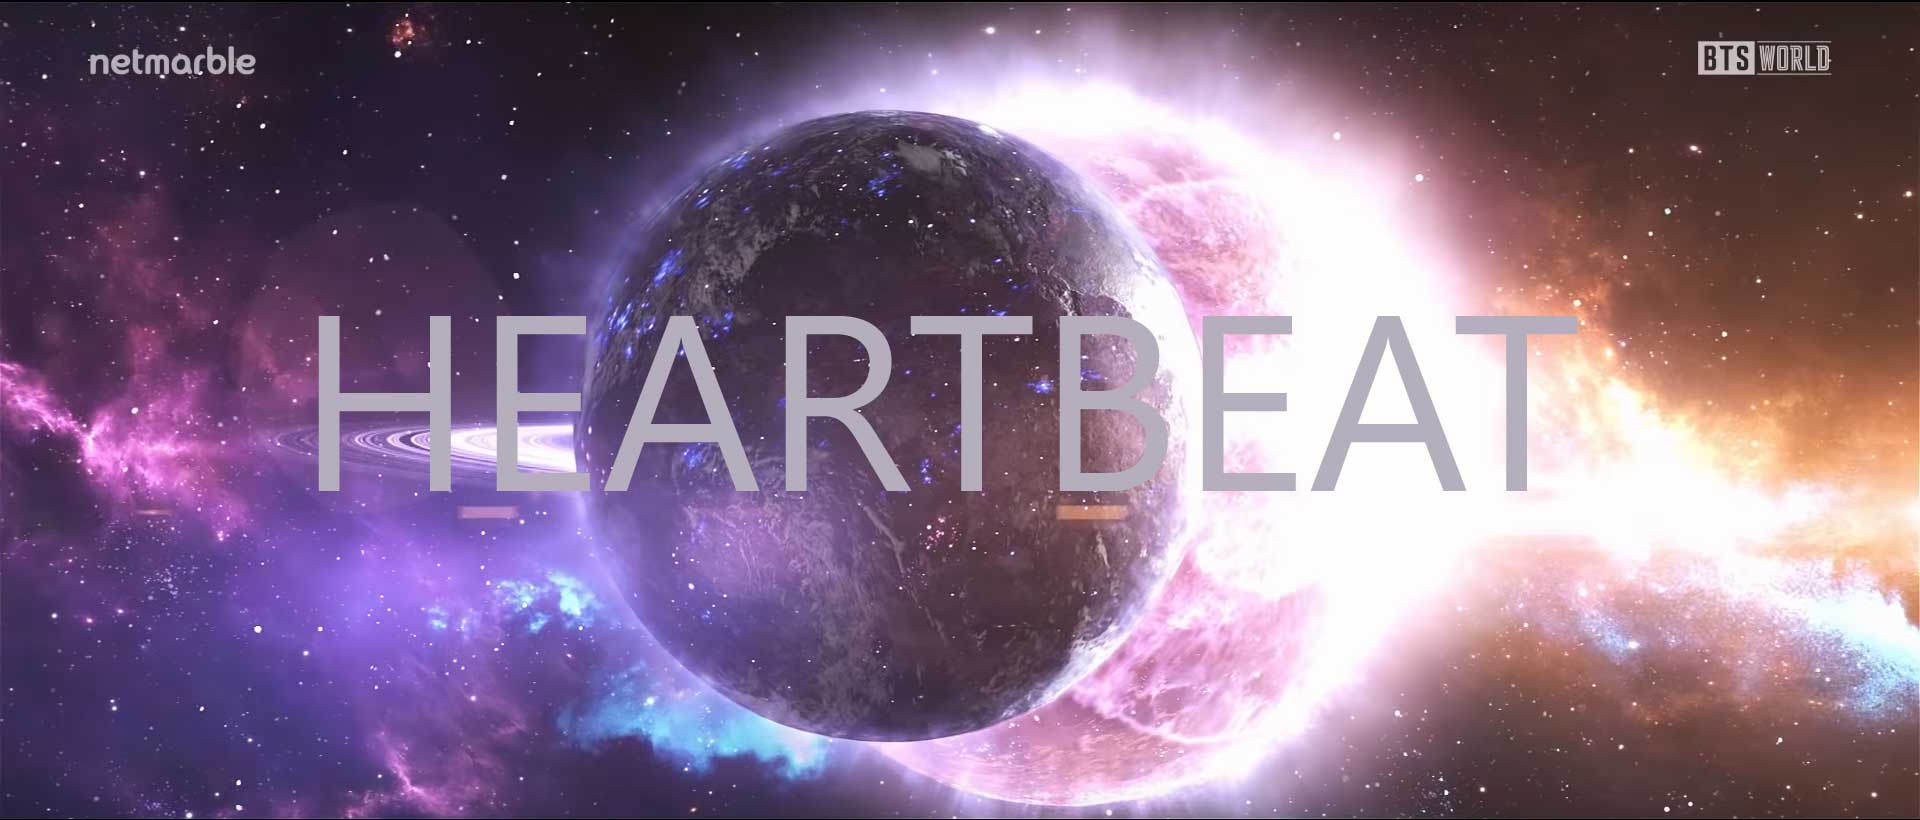 BTS - Heartbeat перевод песни, текст и слова1920 x 820